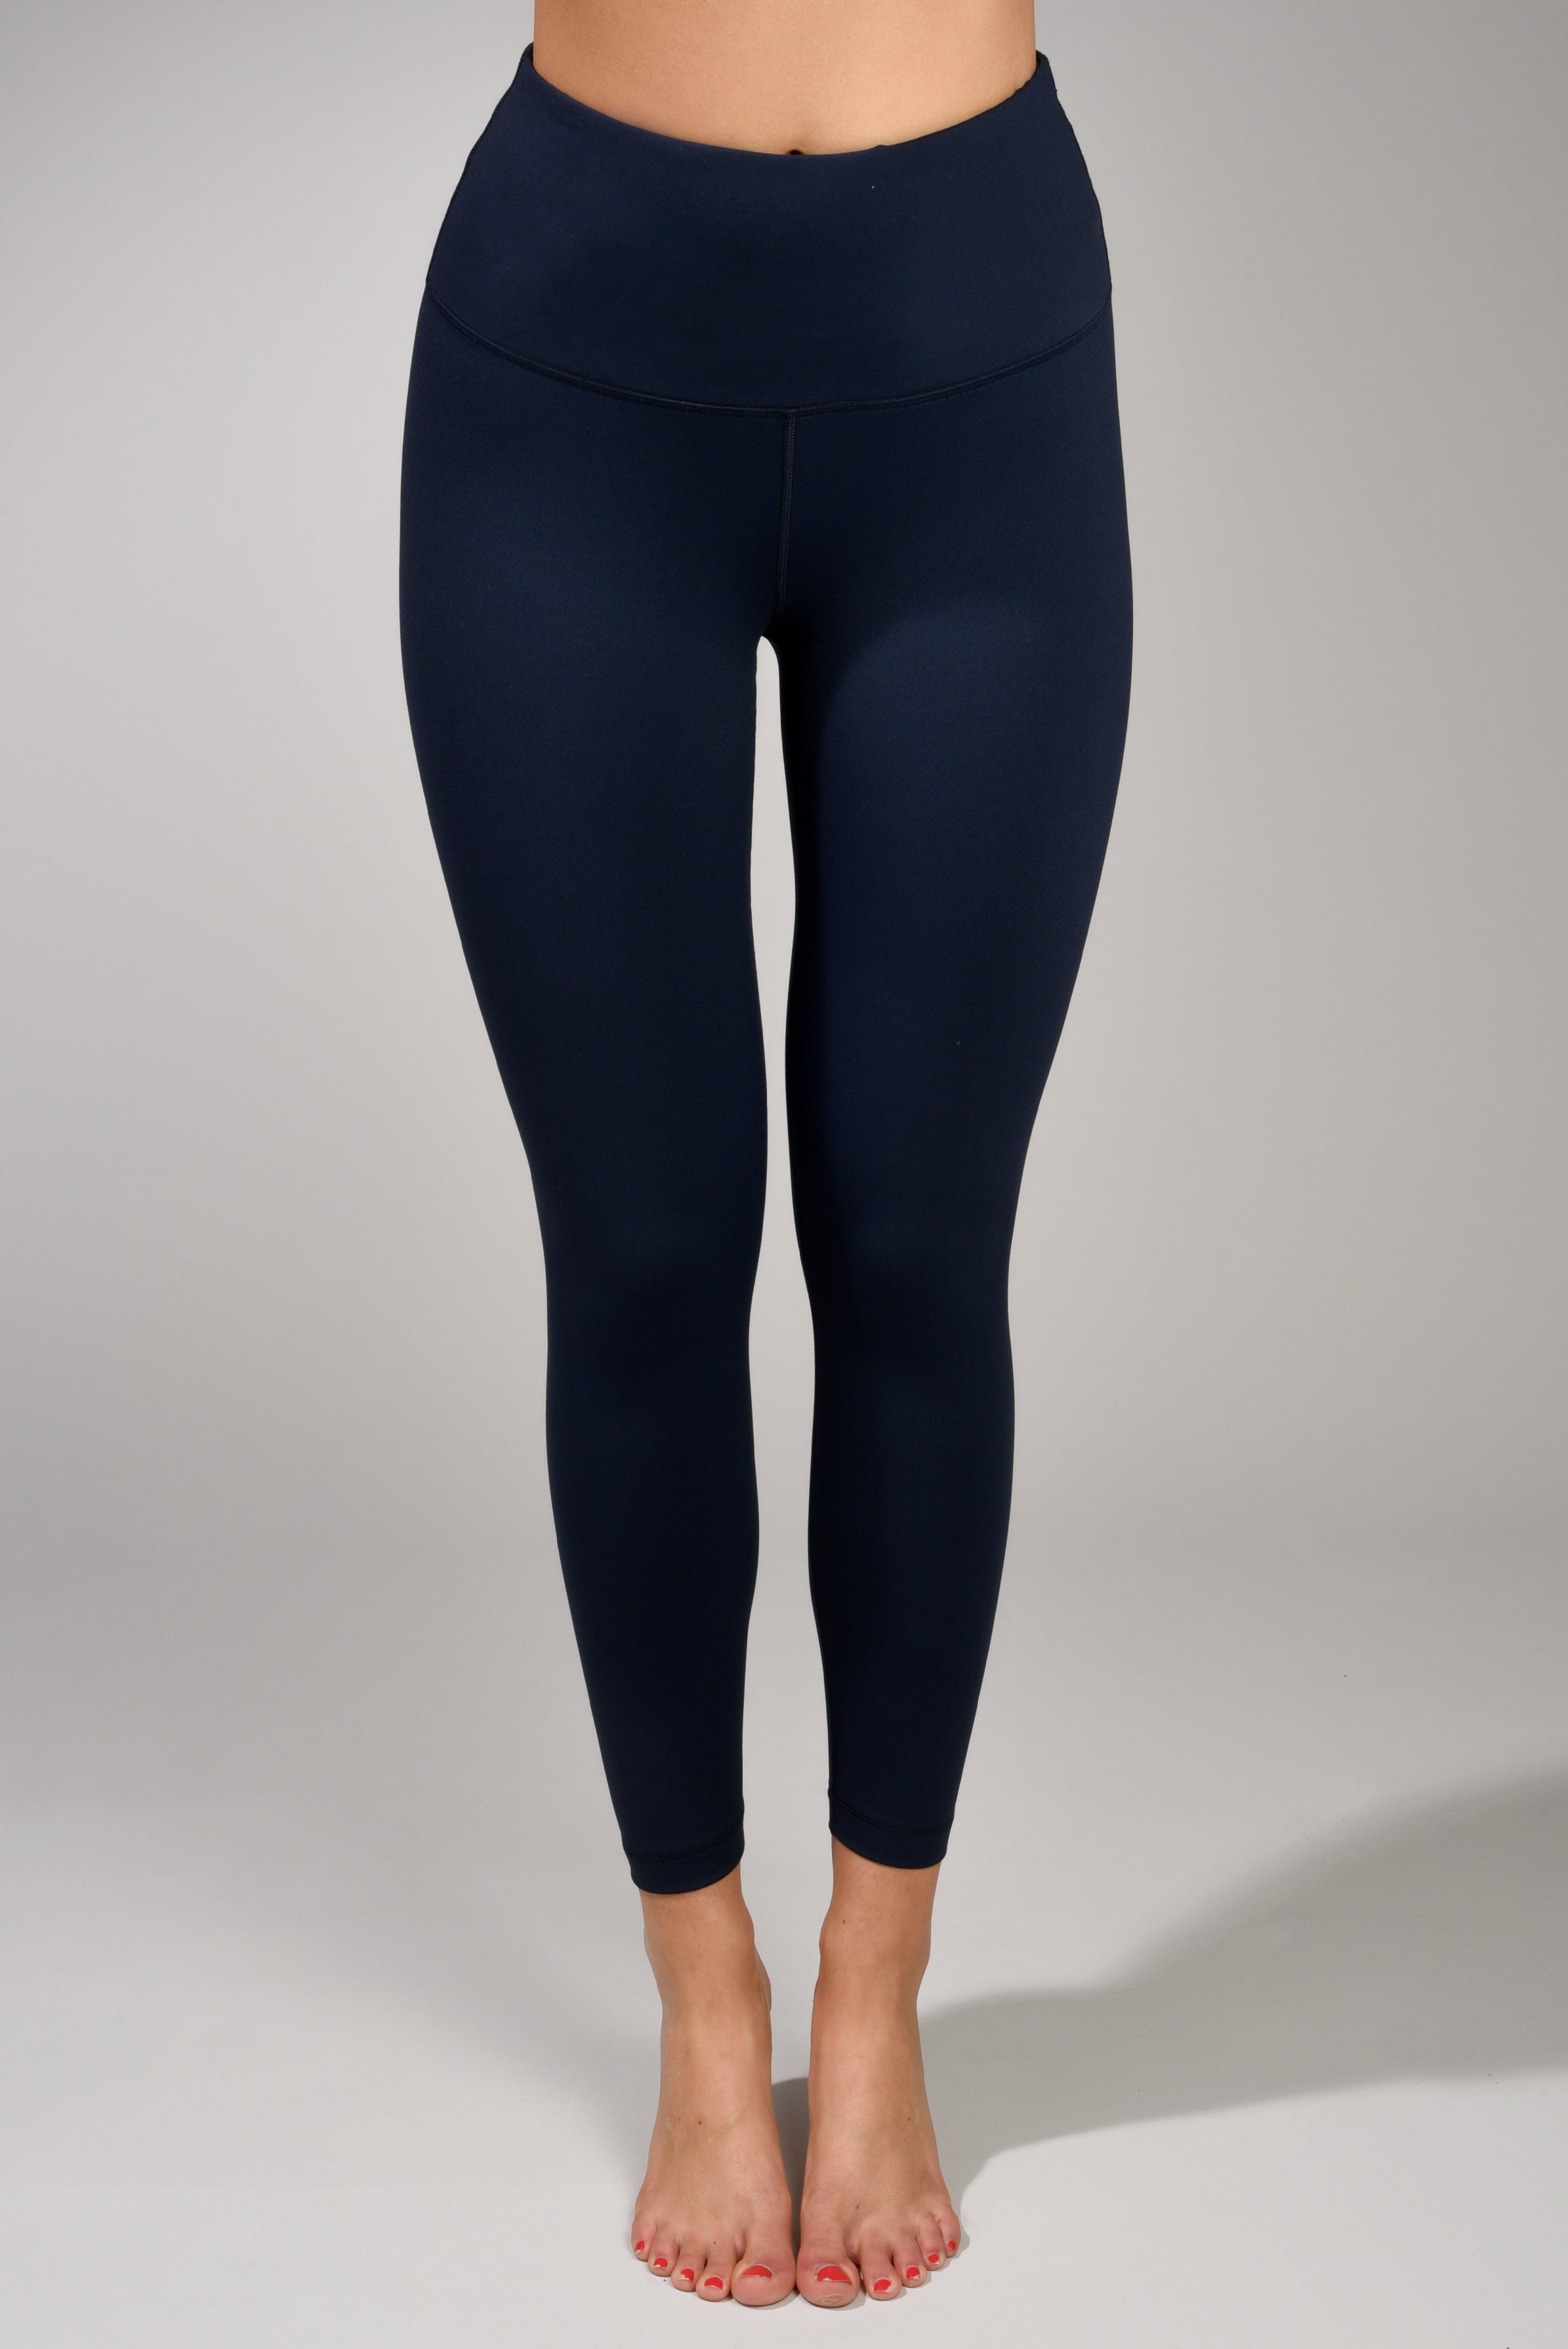 Latex Leggings - Just wow 😍 Rate 1-10! Glossy spandex leggings at link in  bio! 🔍Search for: Glam Girl Glossy Spandex High Waist Leggings  https://www.lalelook.com/product/glam-girl-glossy-spandex-high-waist- leggings/ @fainka.mmmi | Facebook